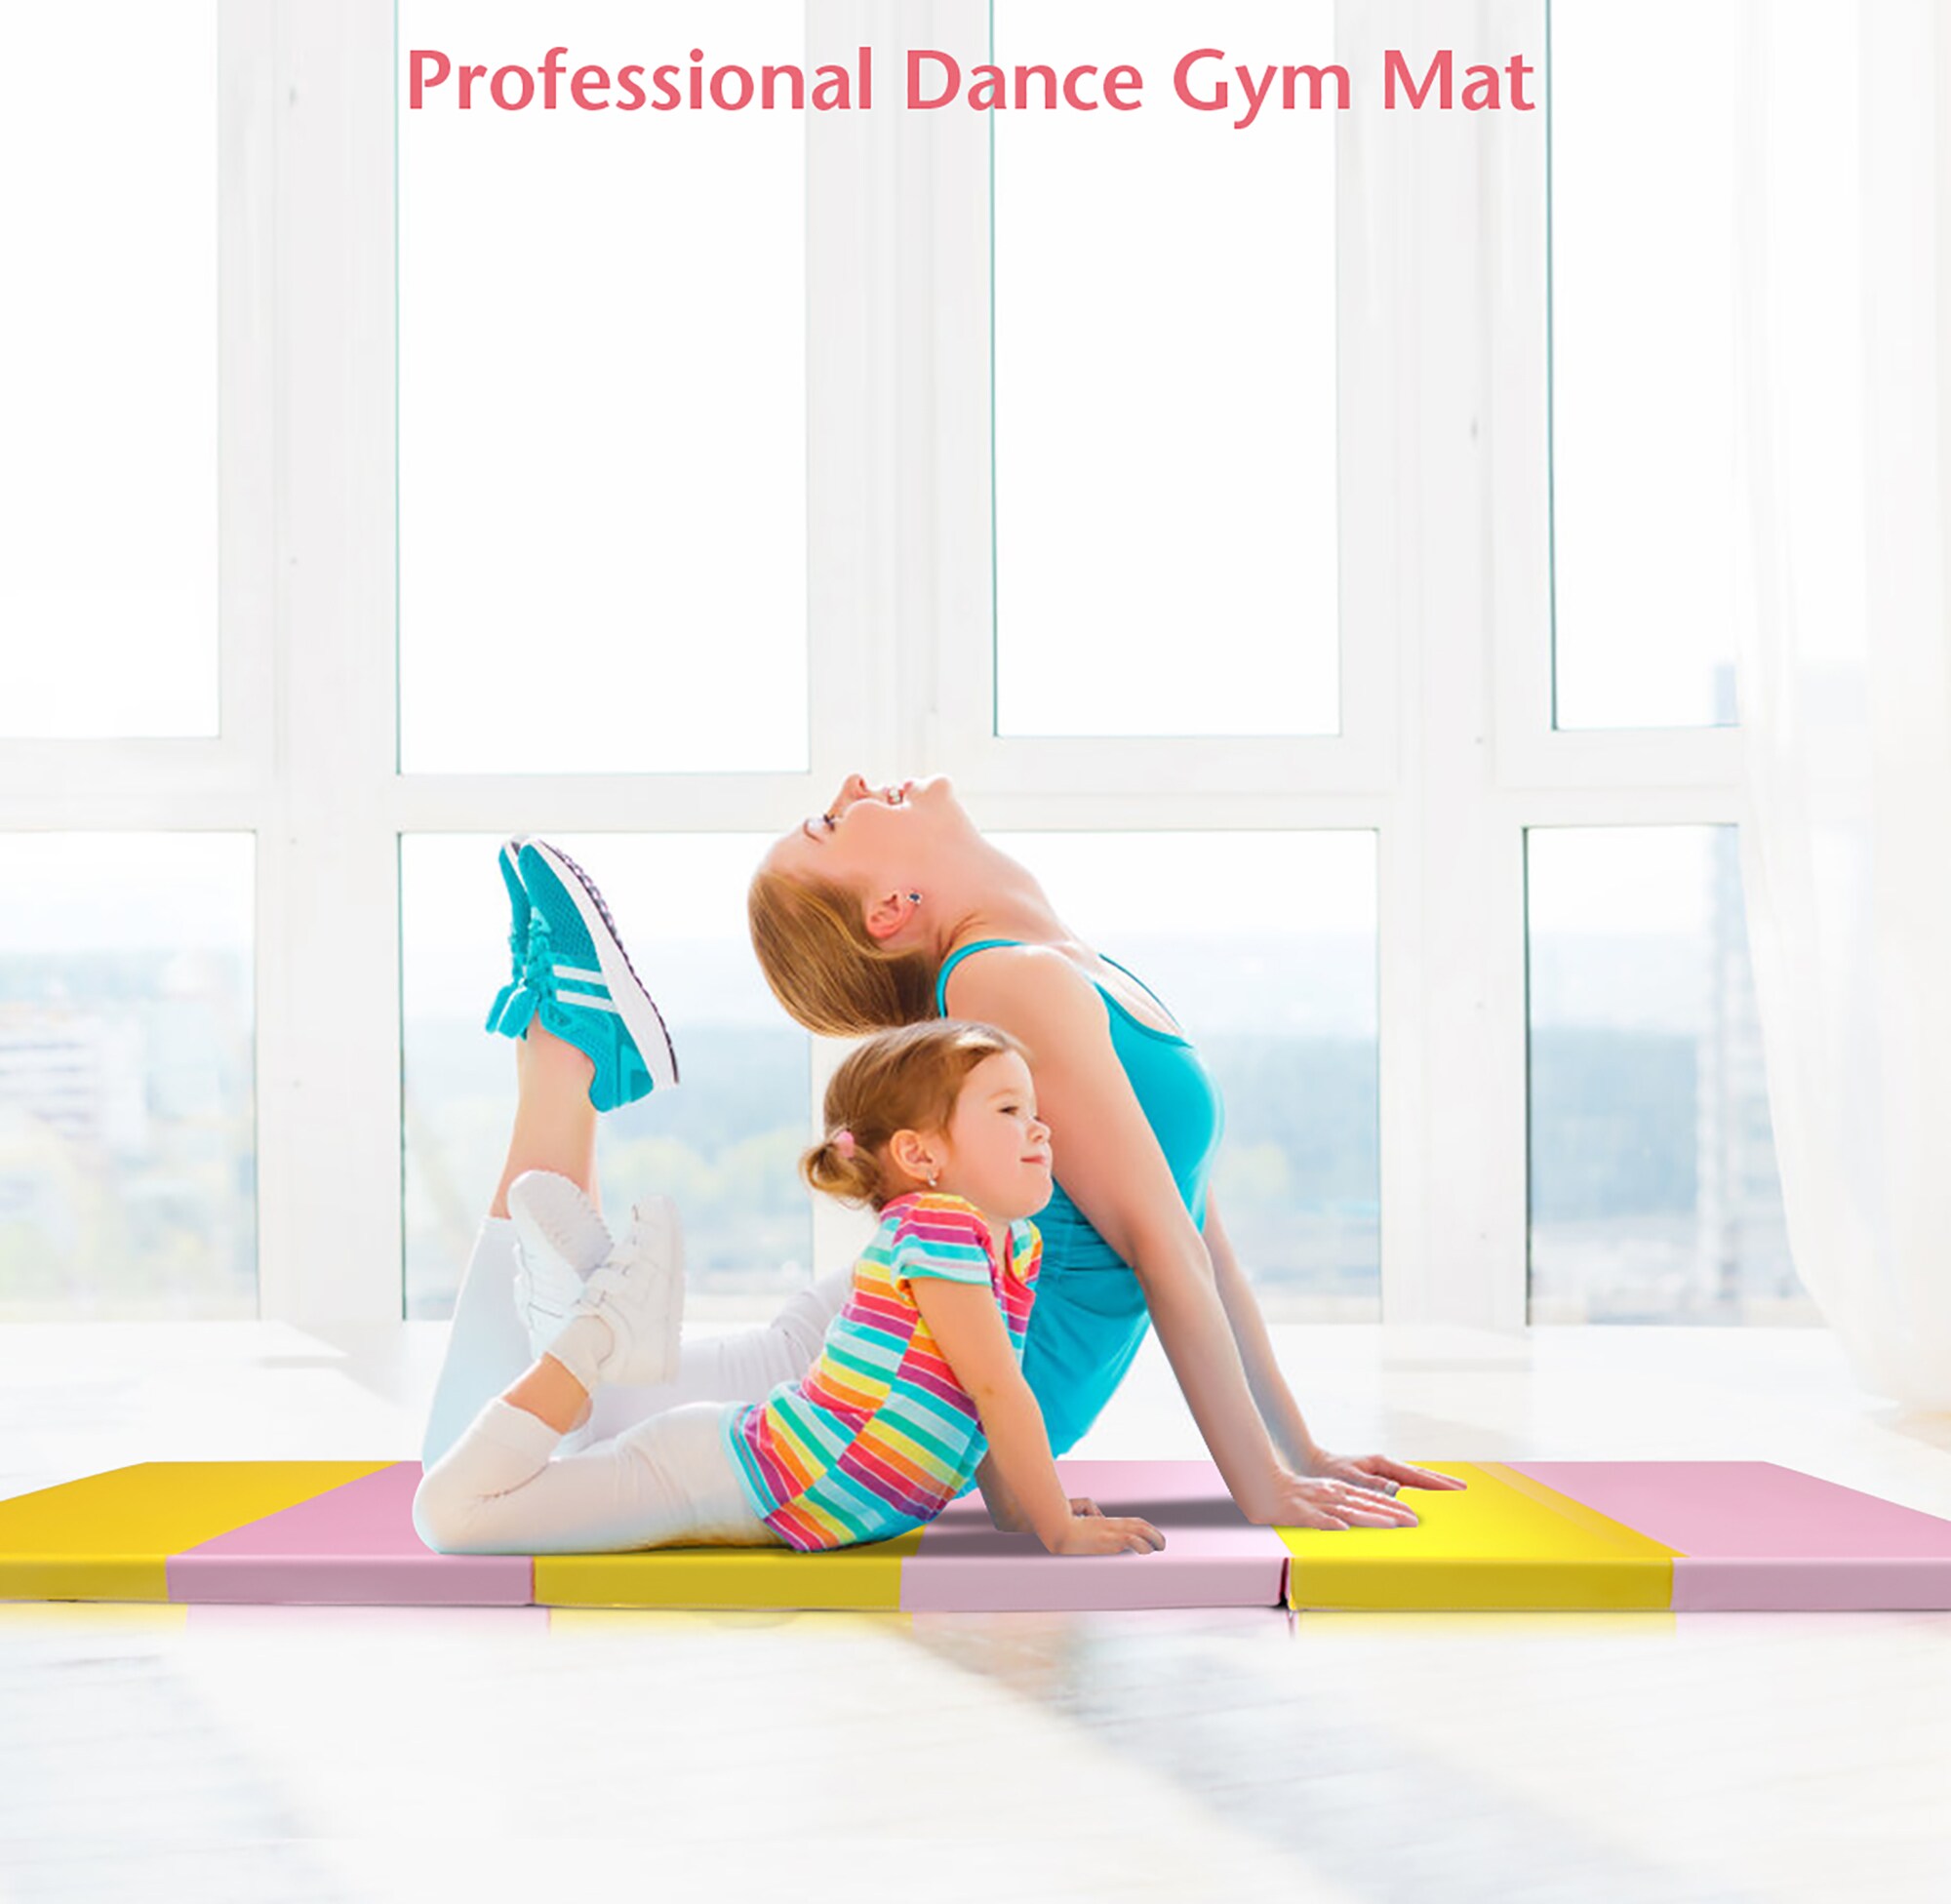 6' x 2' Durable Exercise Non-Slip PU Leather Gym Mat Gymnastics Yoga Dancing 